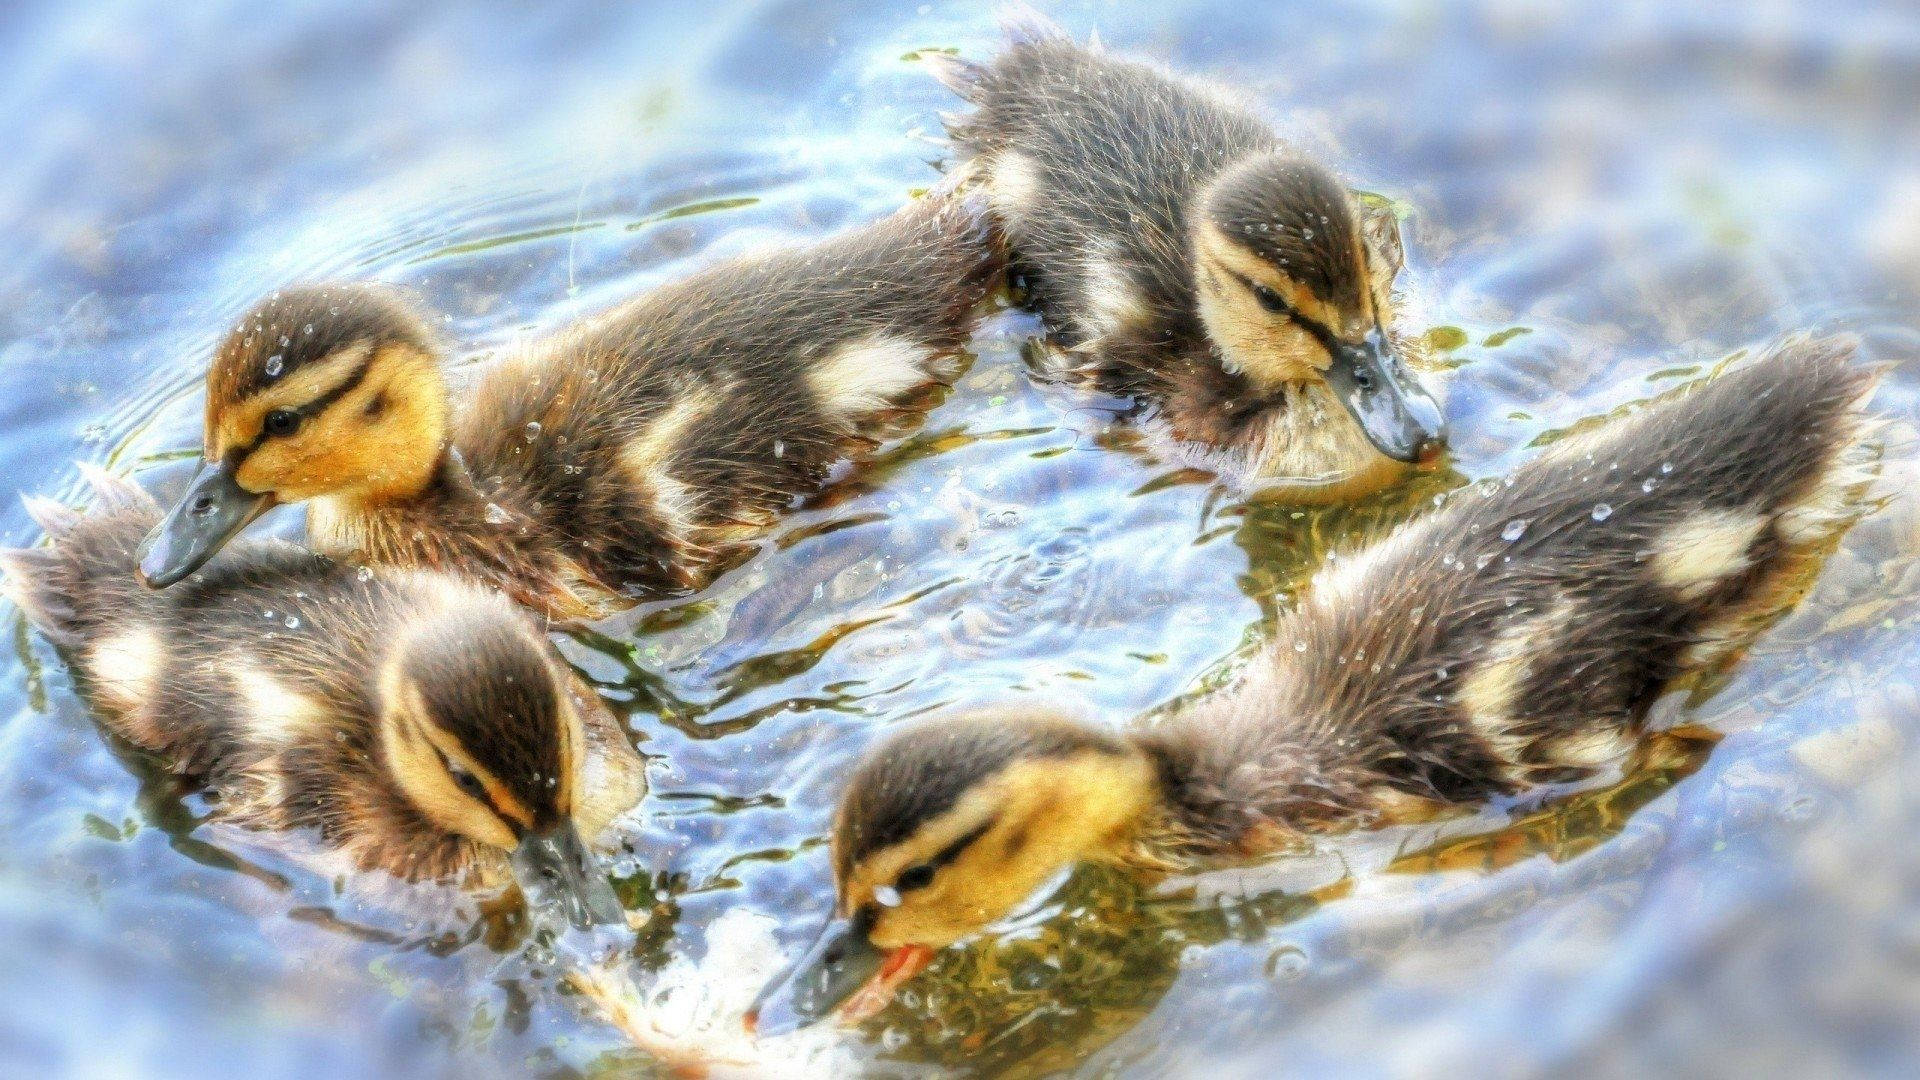 Shiny Baby Ducks Background